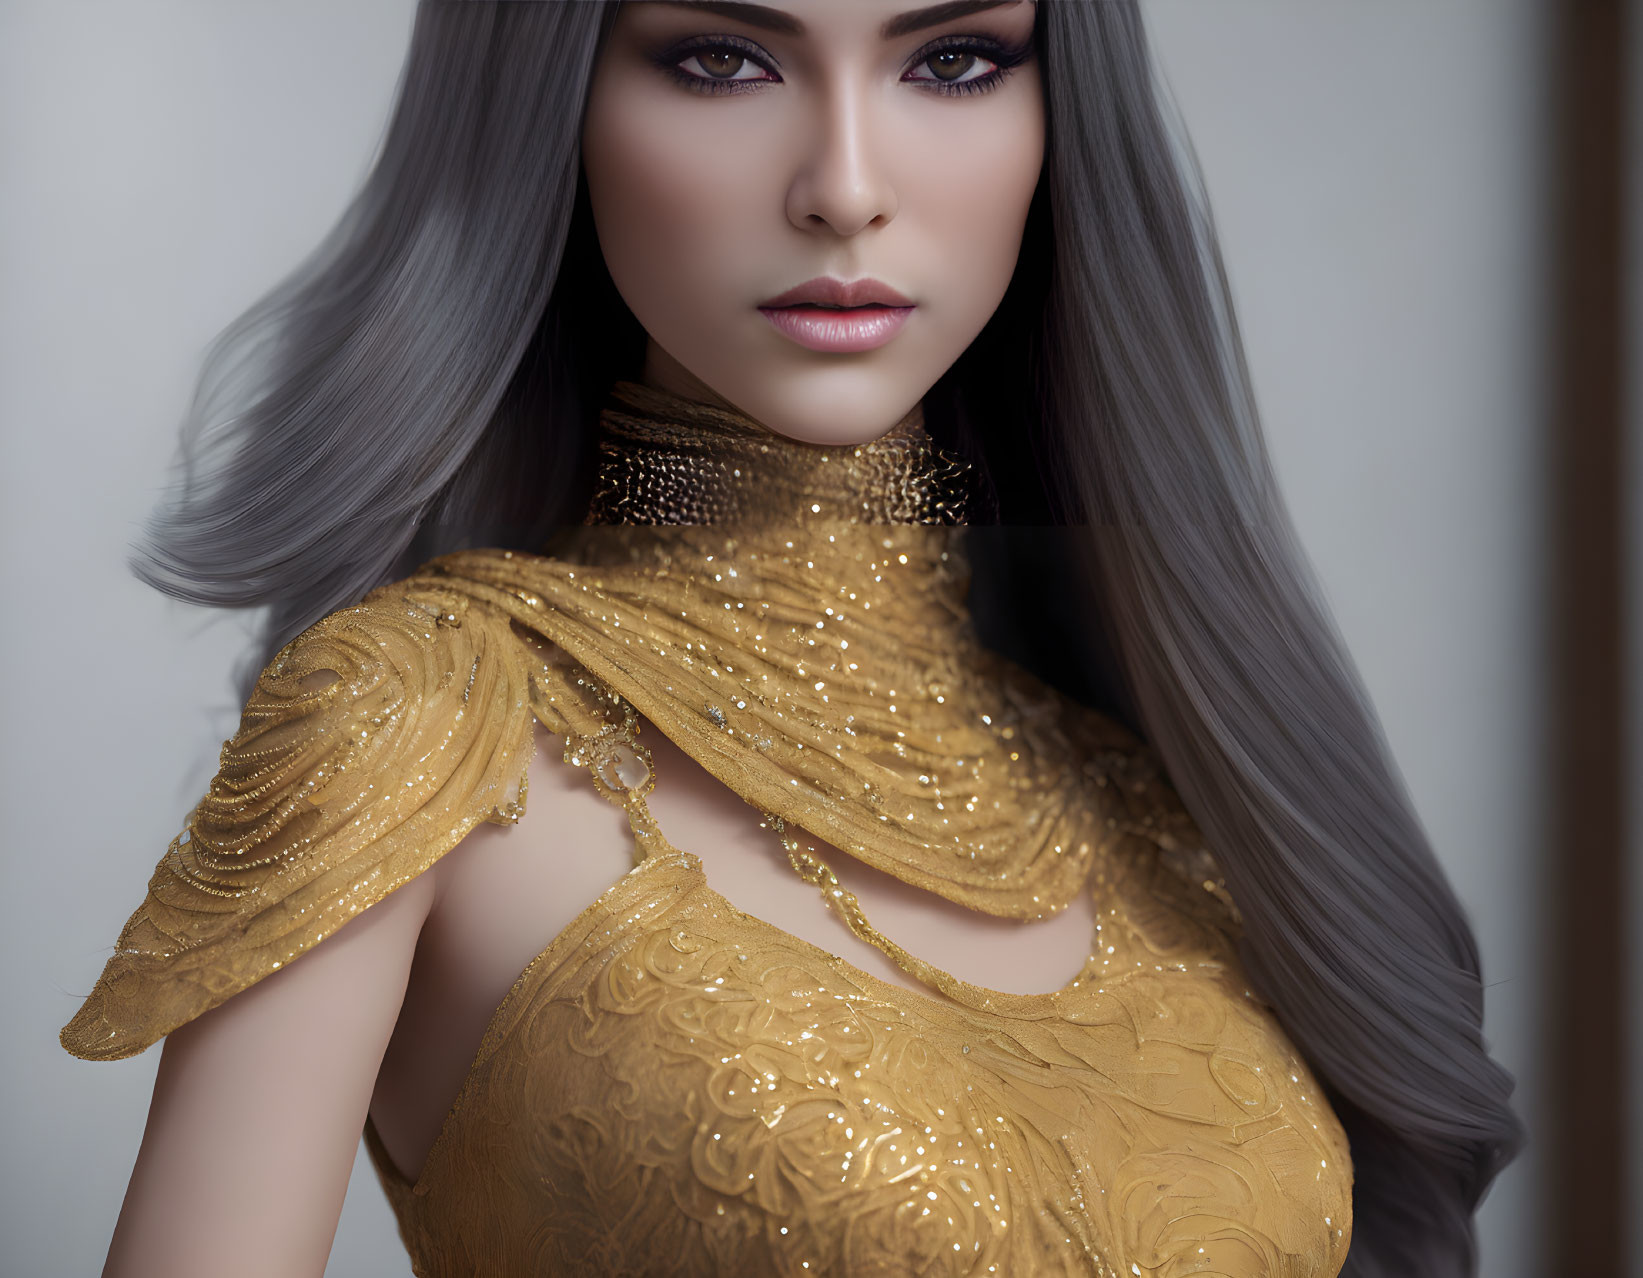 Digital Artwork: Woman with Gray Hair, Purple Eyes, & Gold Shoulder Garment